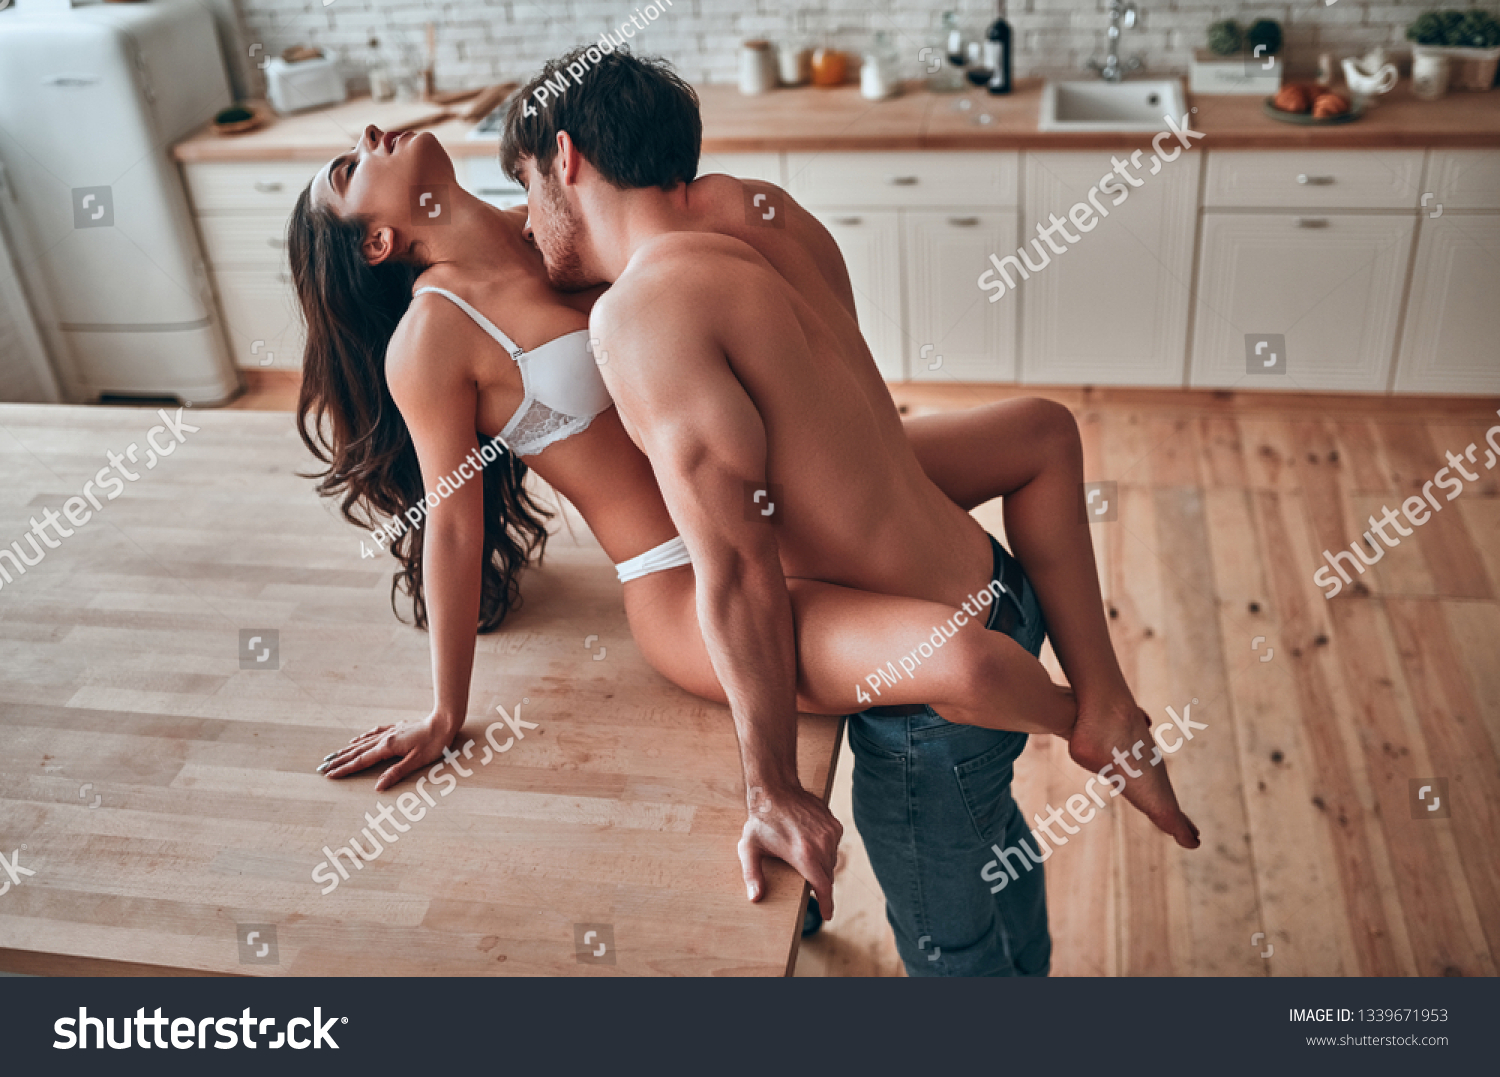 kitchen romance and sex